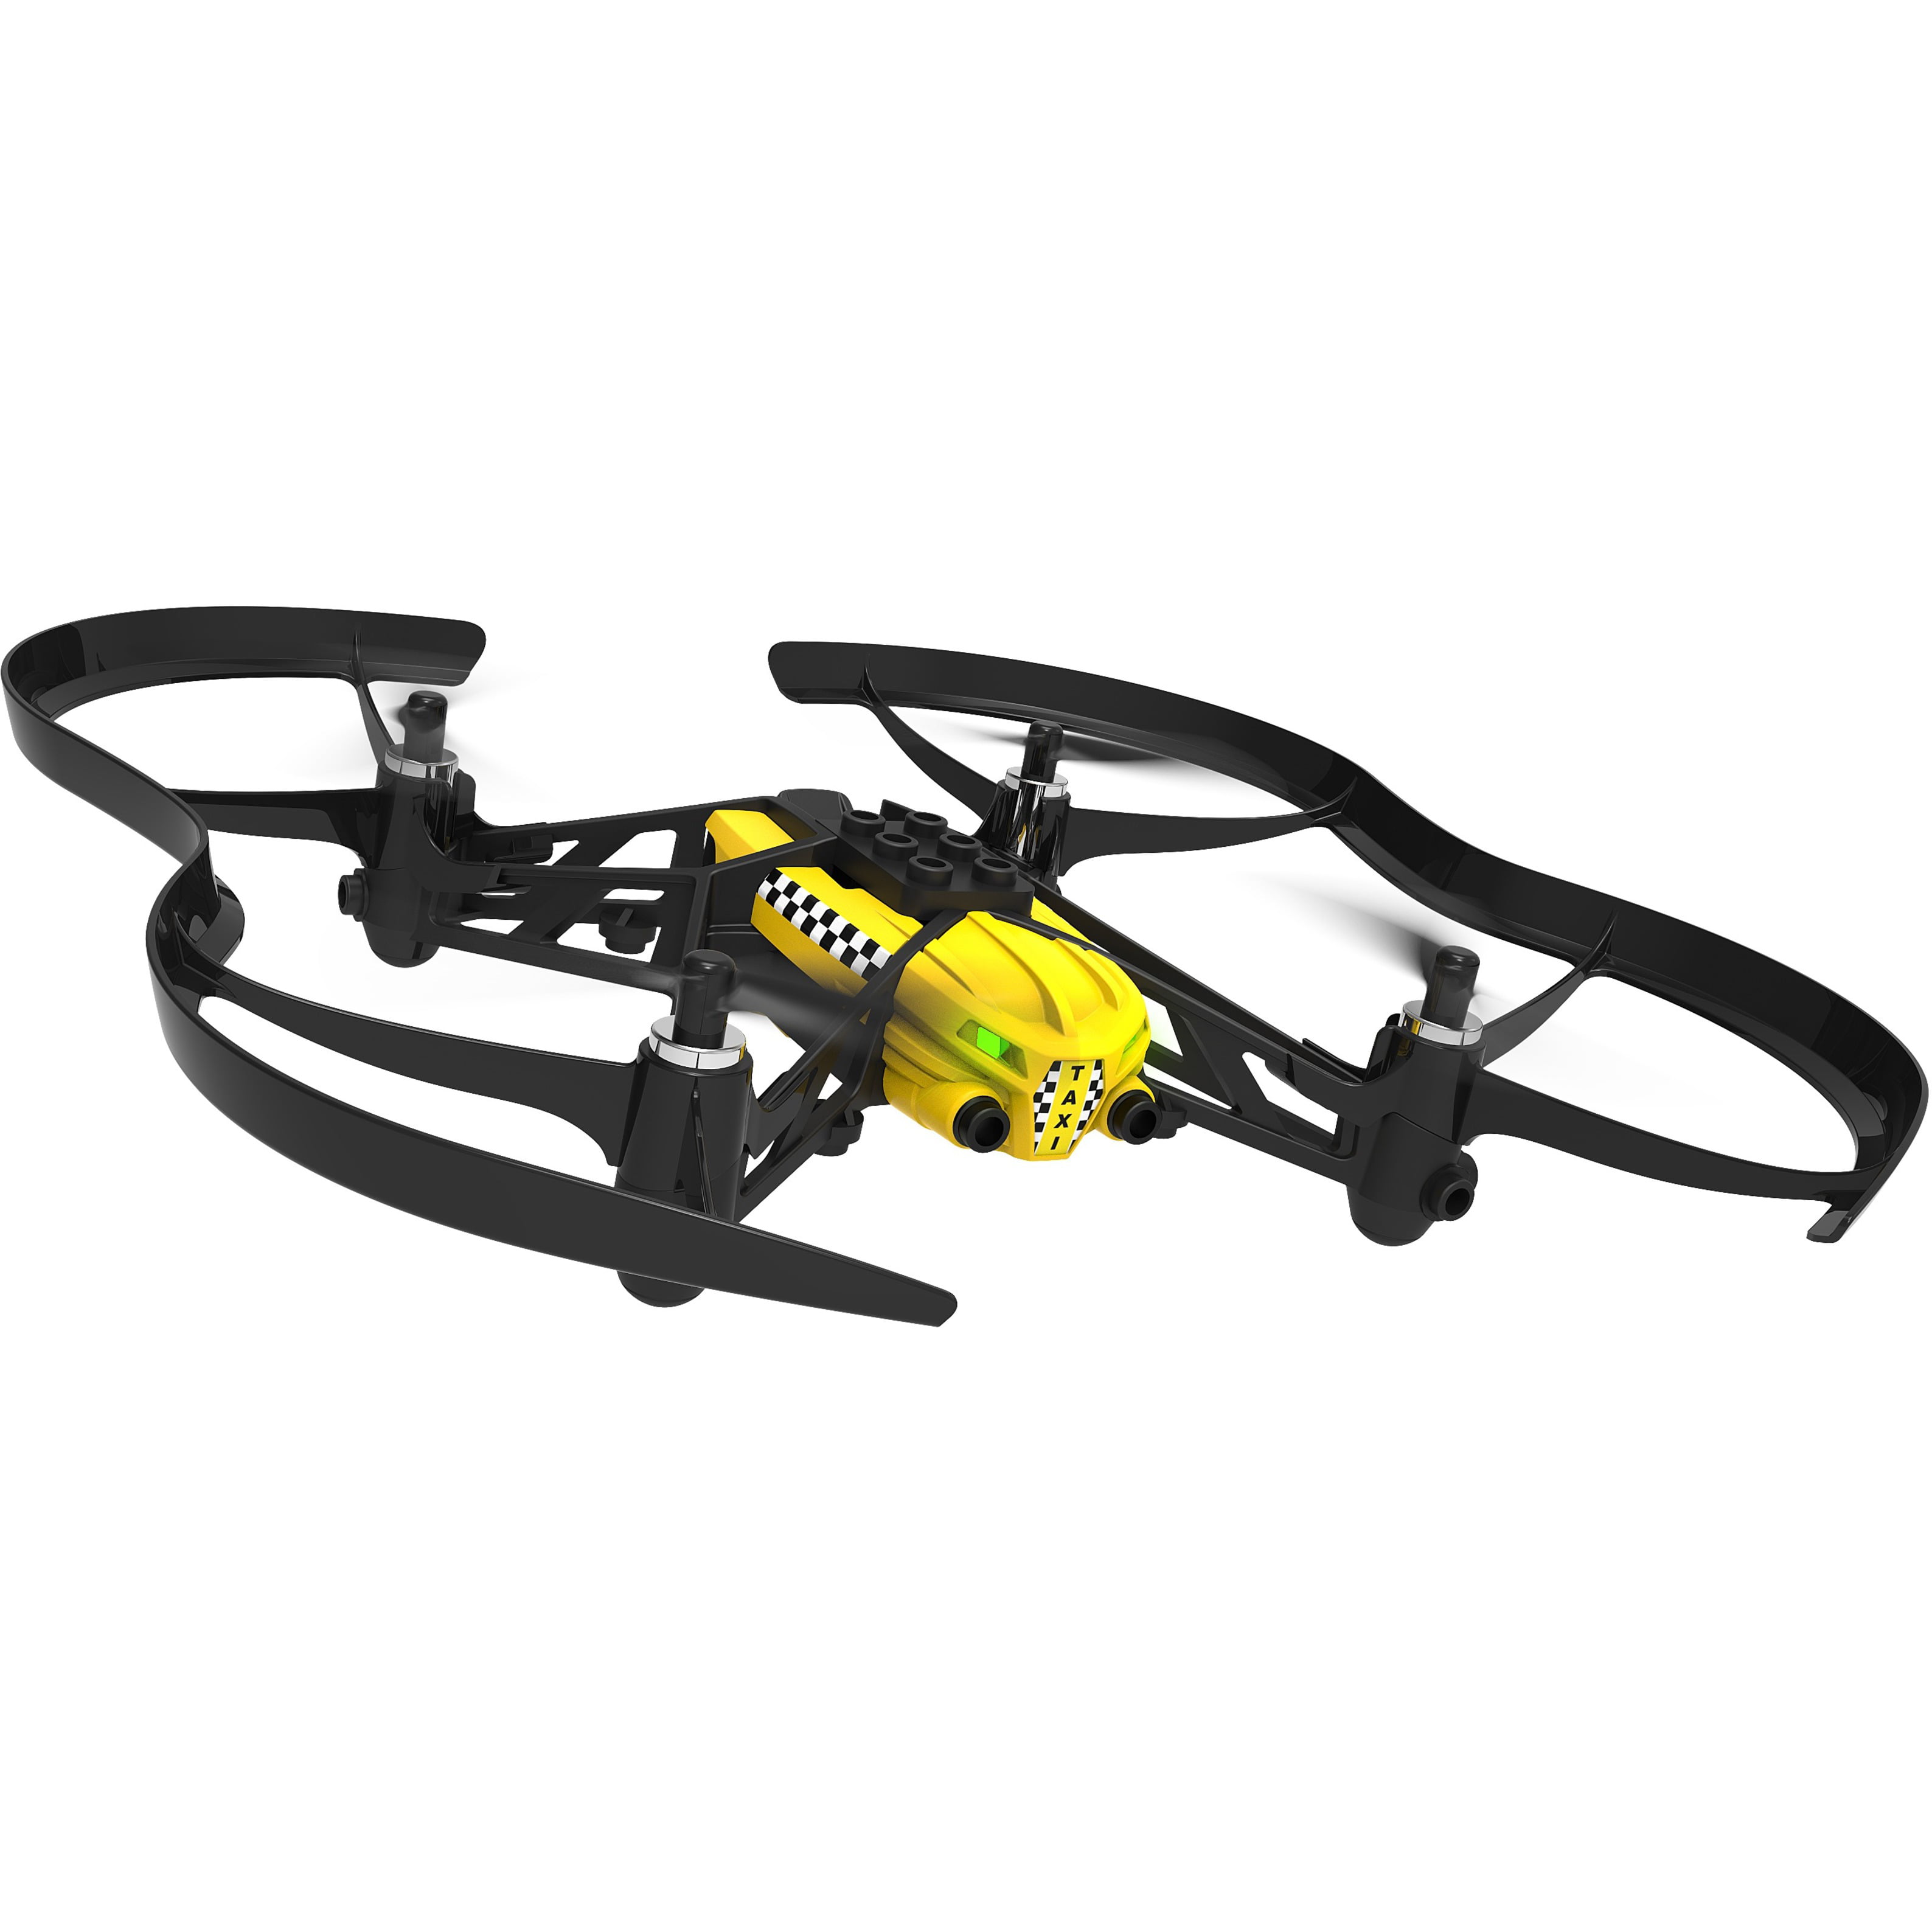 **NEW** PARROT Mini Drones Travis Airborne Cargo Drone 